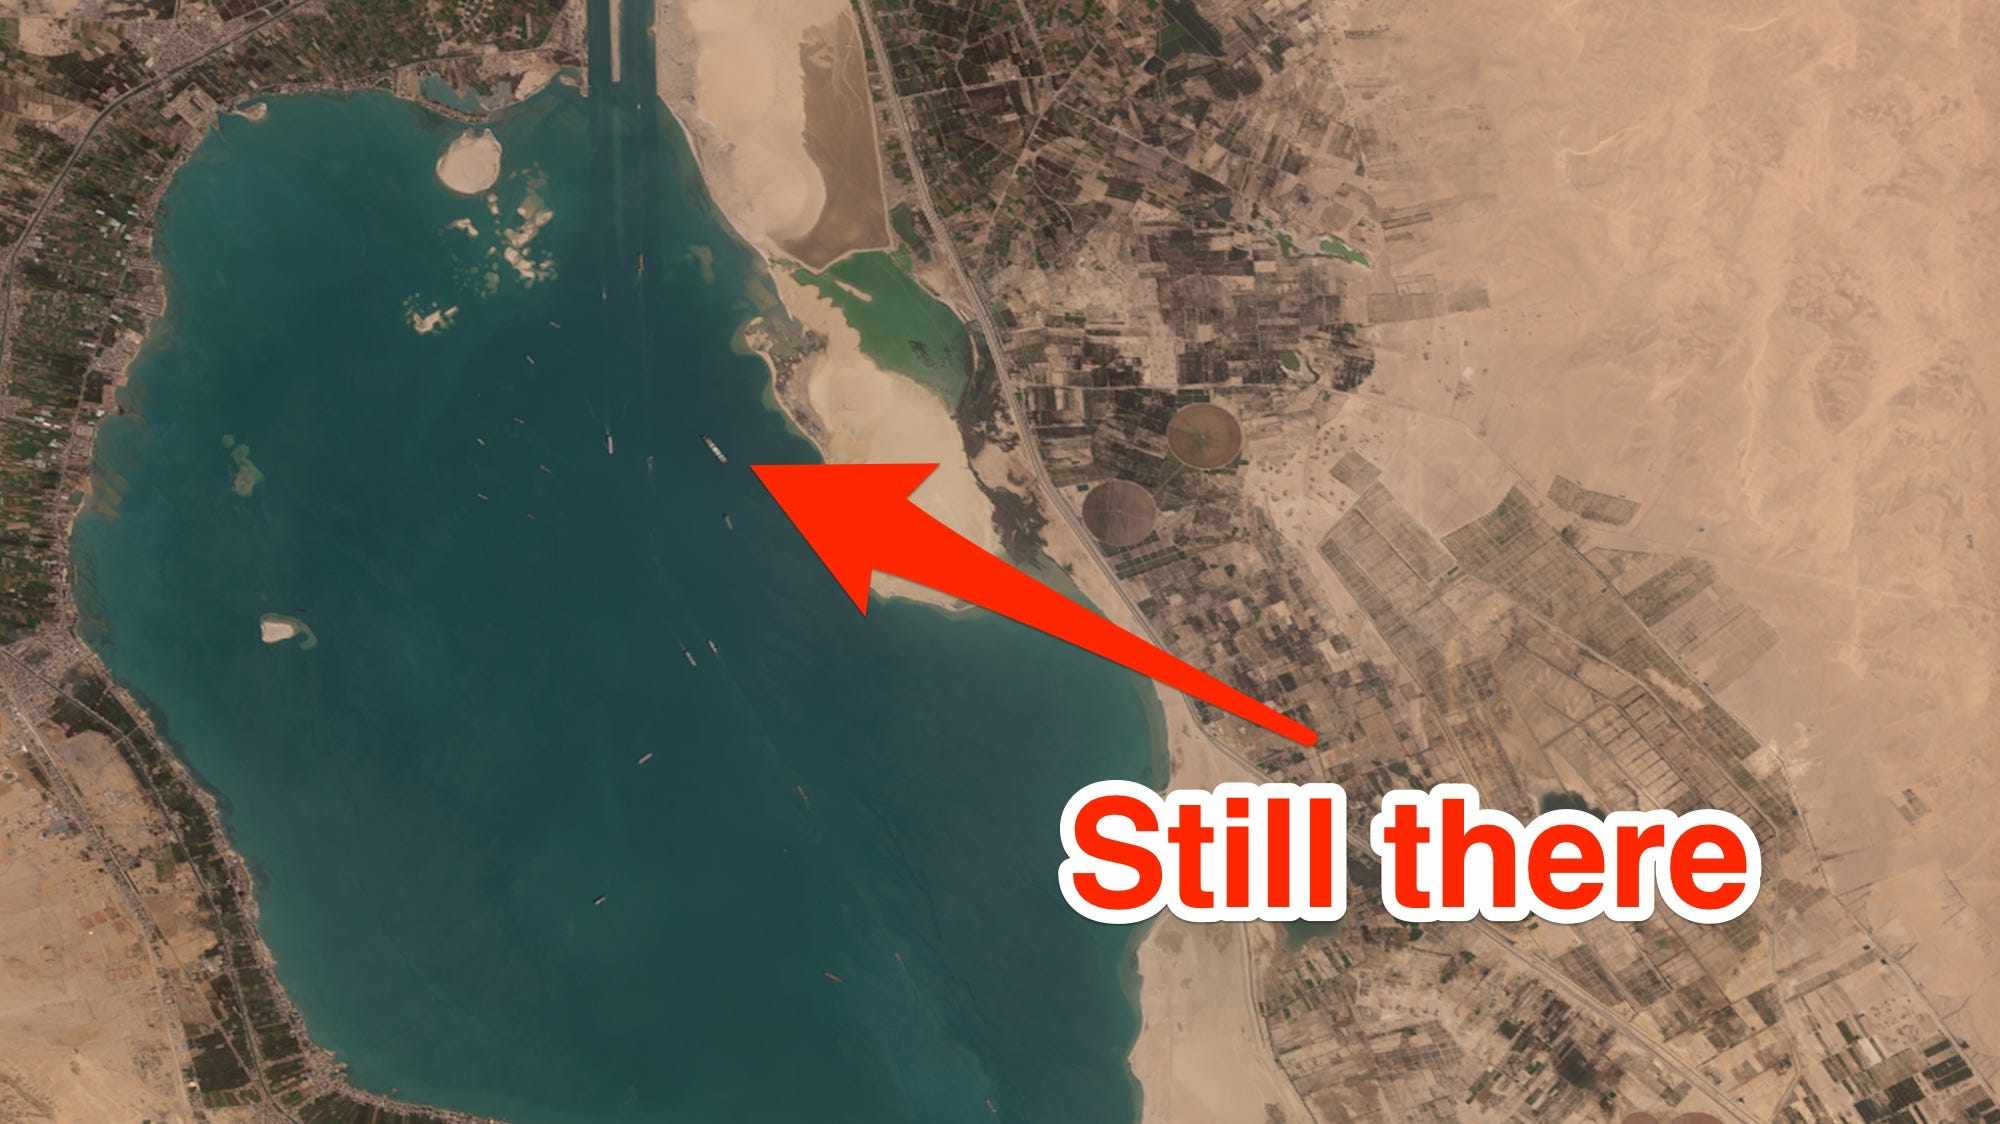 egypt satellite images limbo compensation